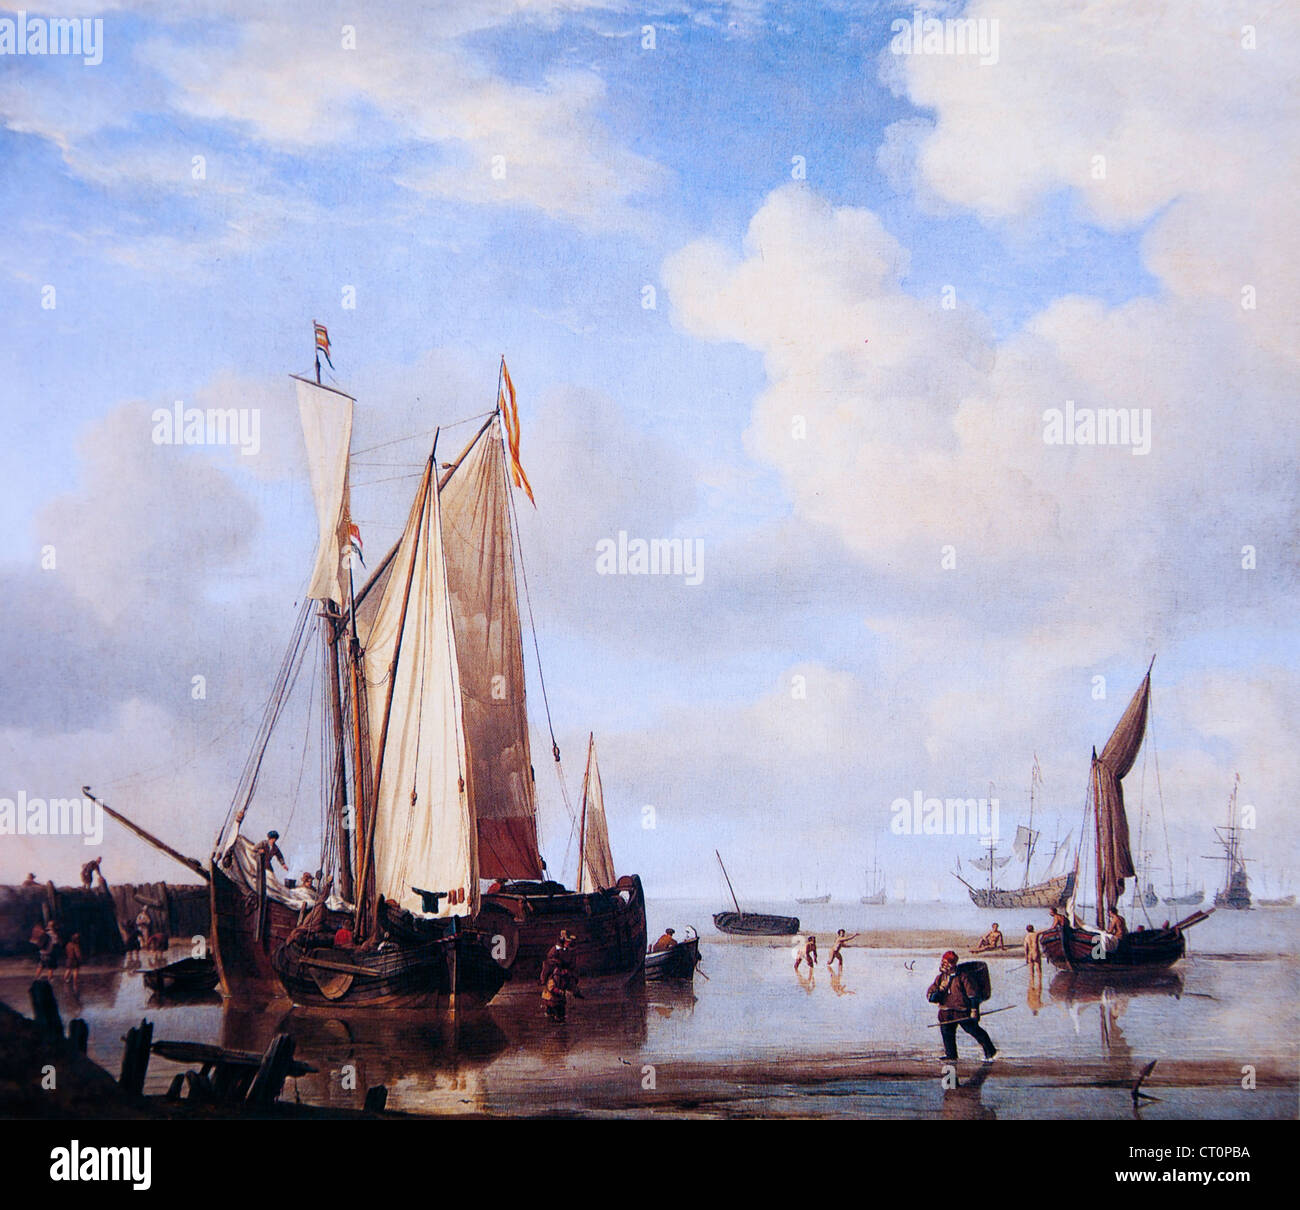 Willem van de Velde - barcos holandeses con marea baja. Foto de stock